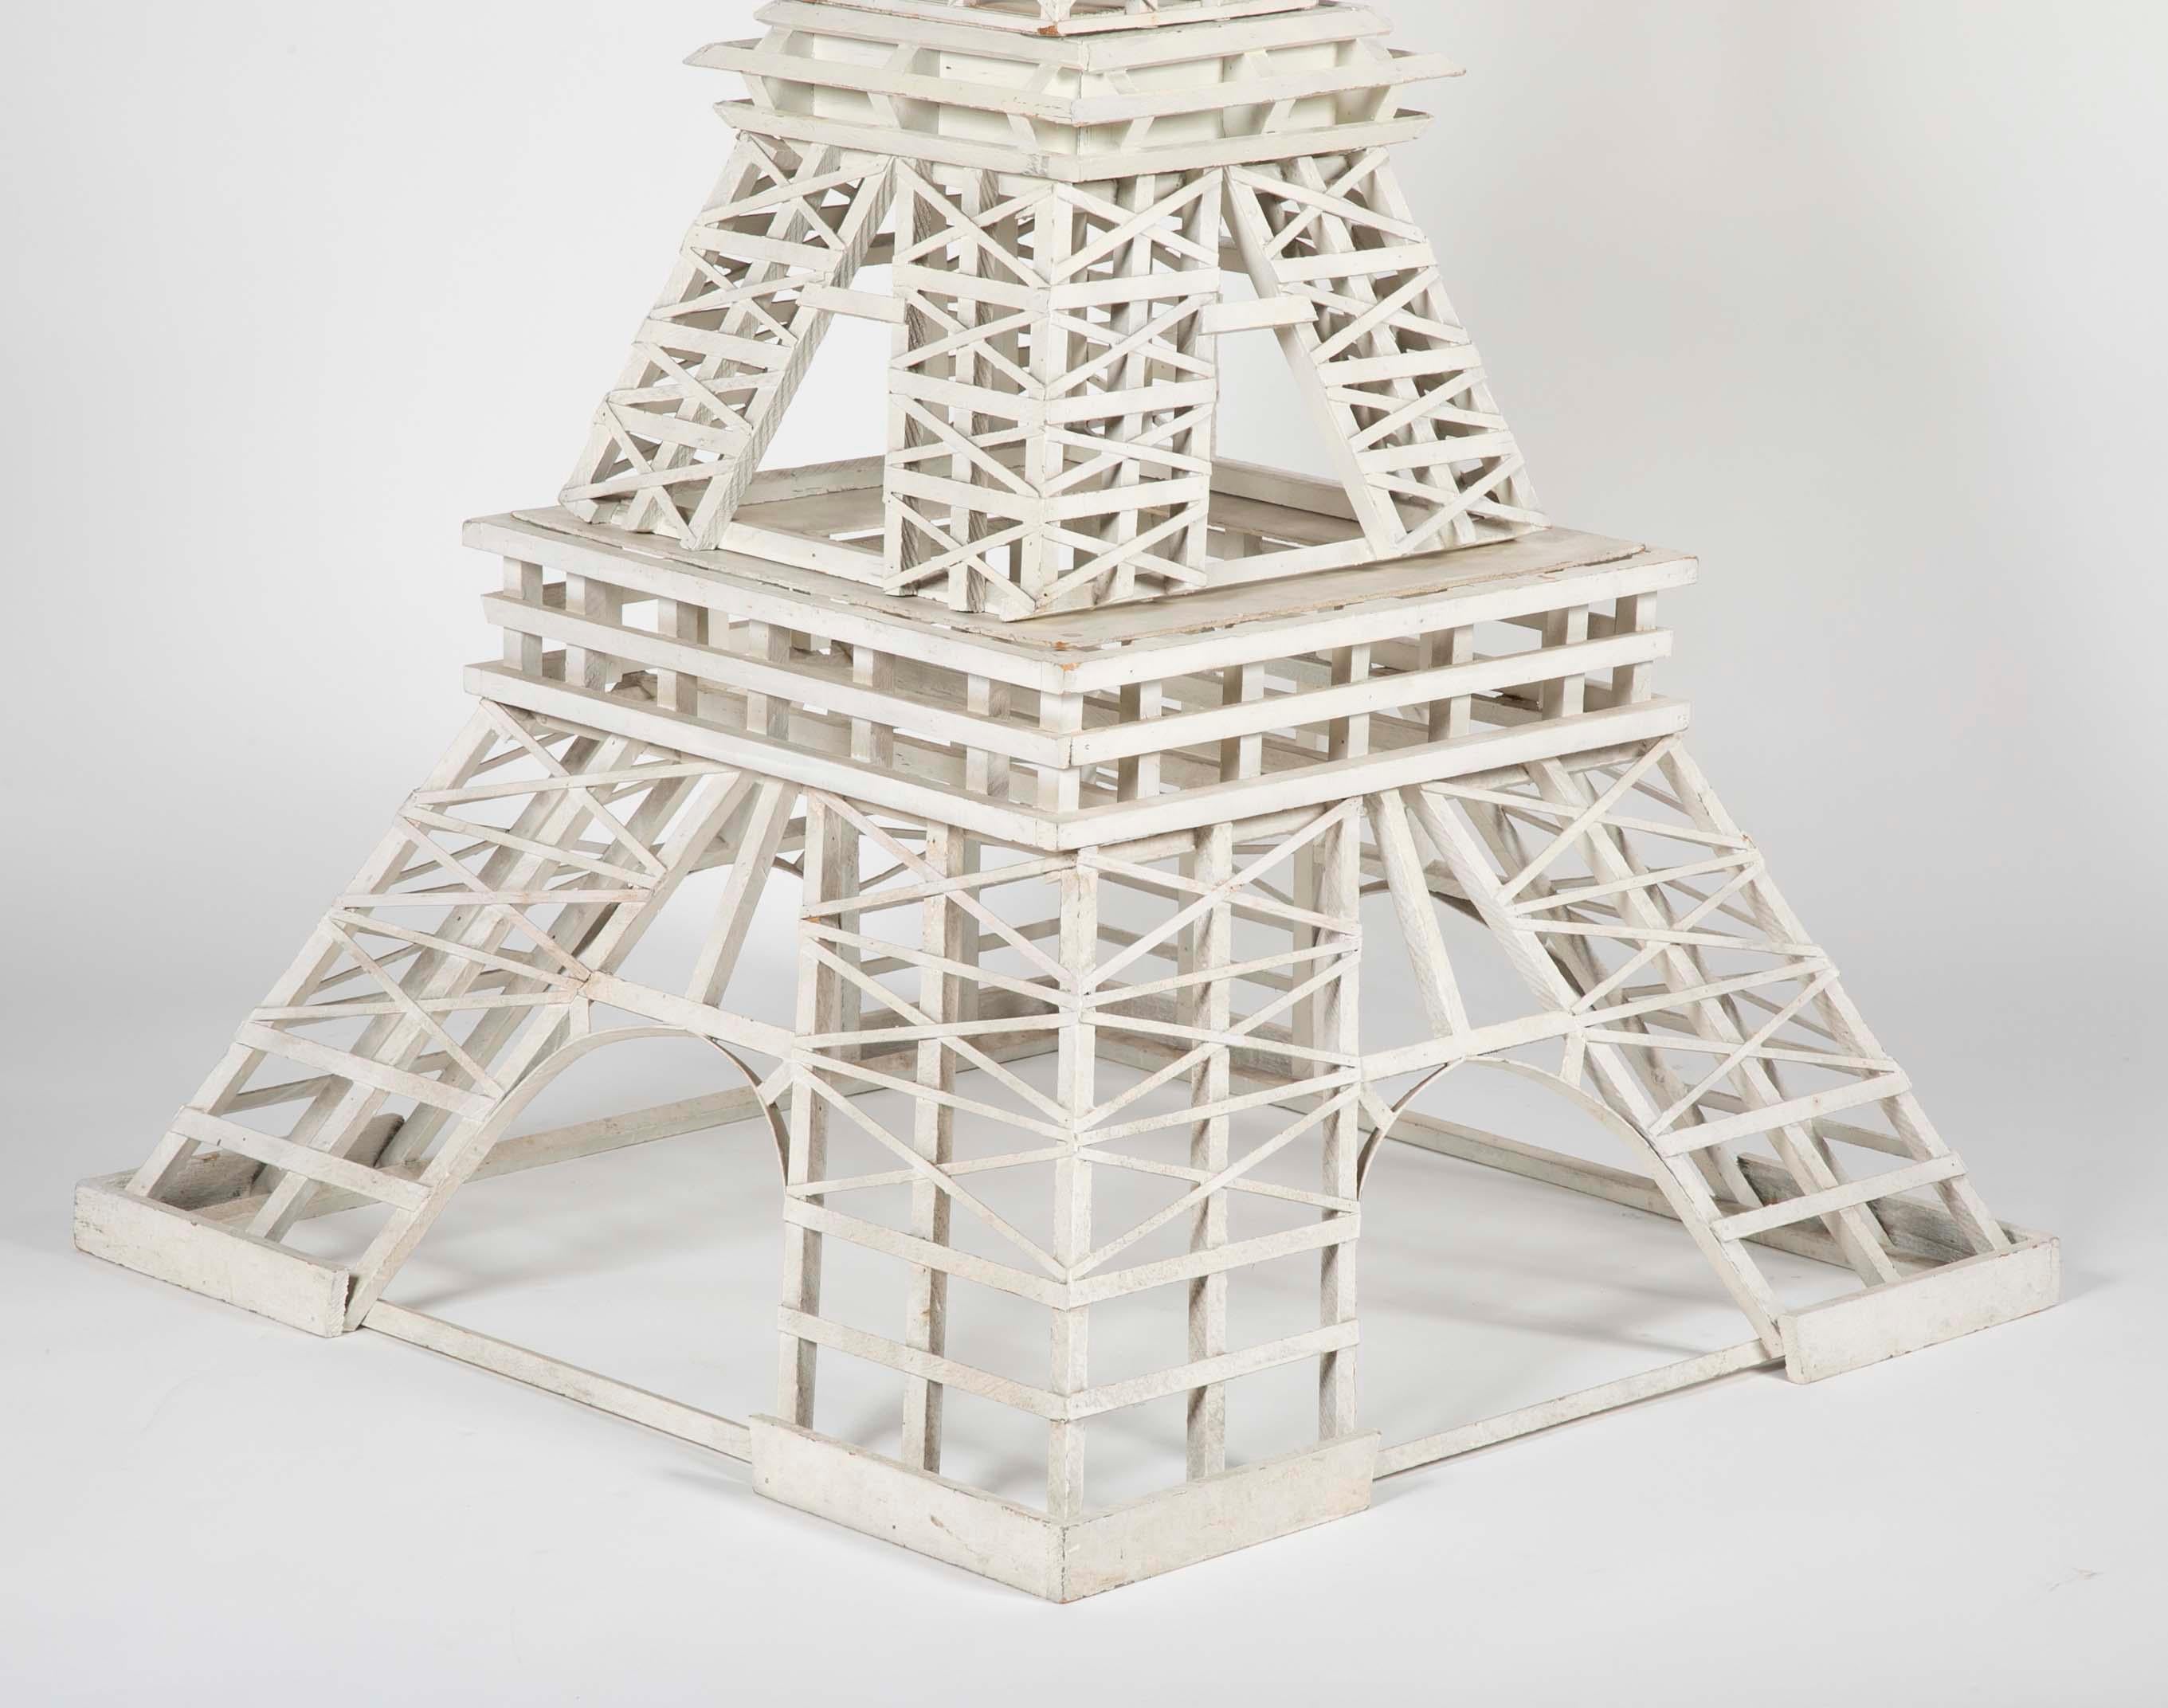 Large Folk Art model Eiffel tower. Created by Matthew M. Orante using 783 pieces of wood. Model accompanied by original newspaper article.